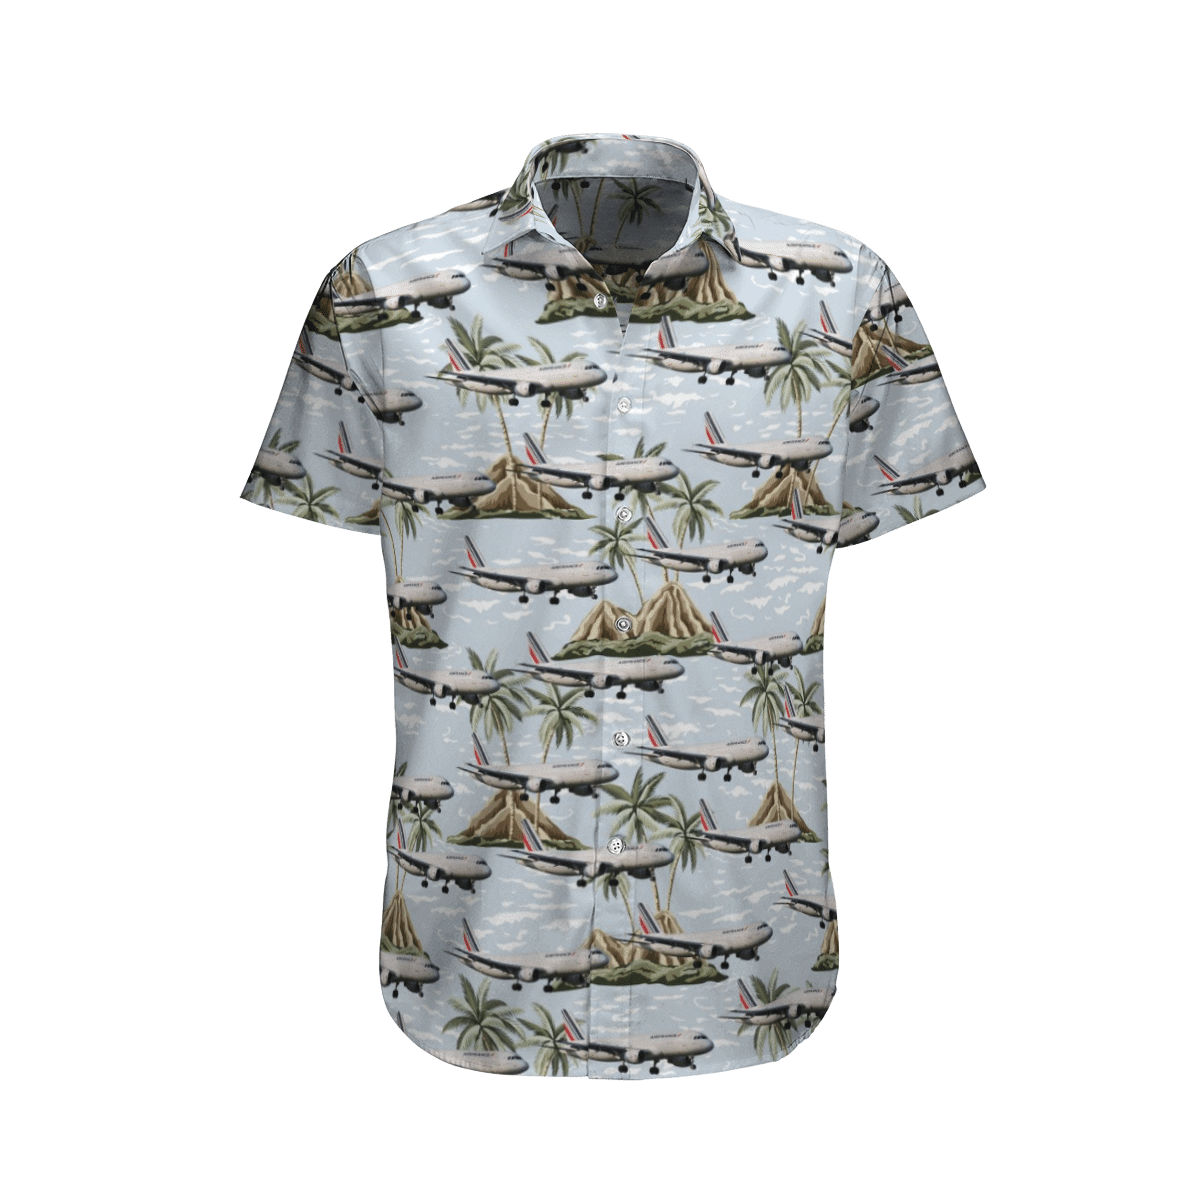 Enjoy your summer with top cool hawaiian shirt below 193